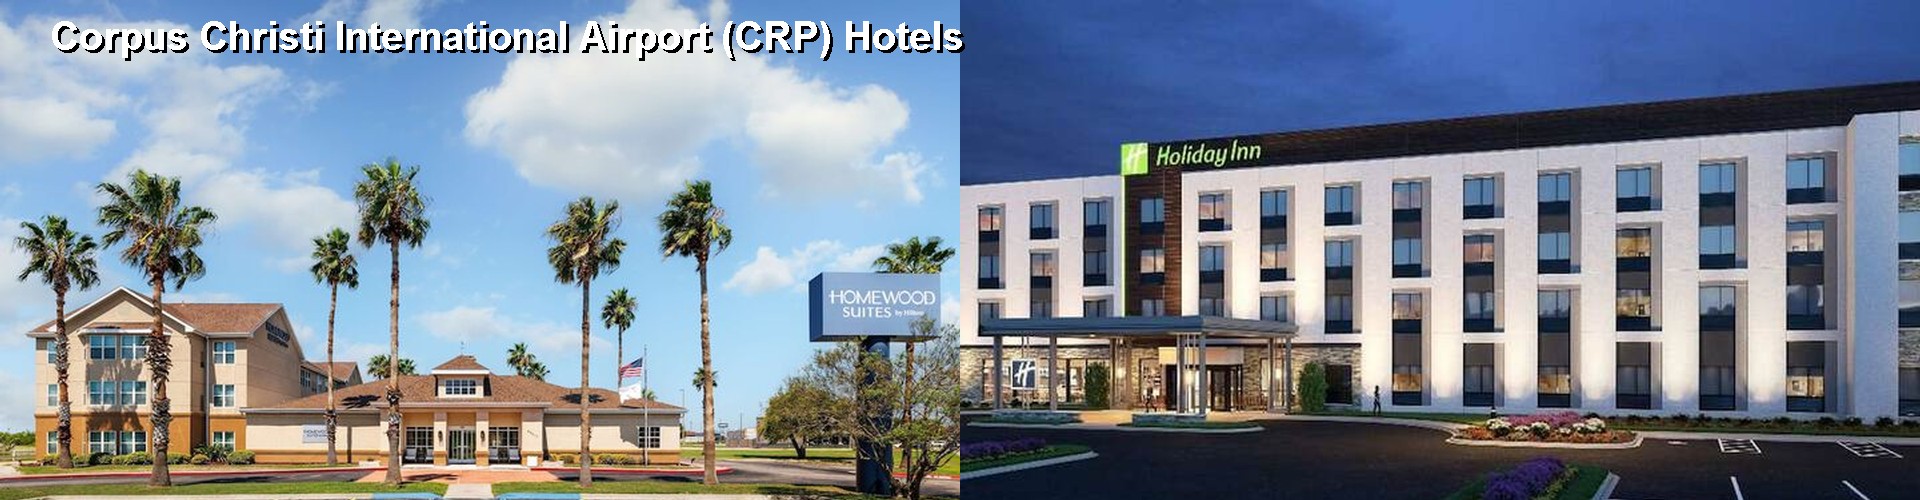 4 Best Hotels near Corpus Christi International Airport (CRP)